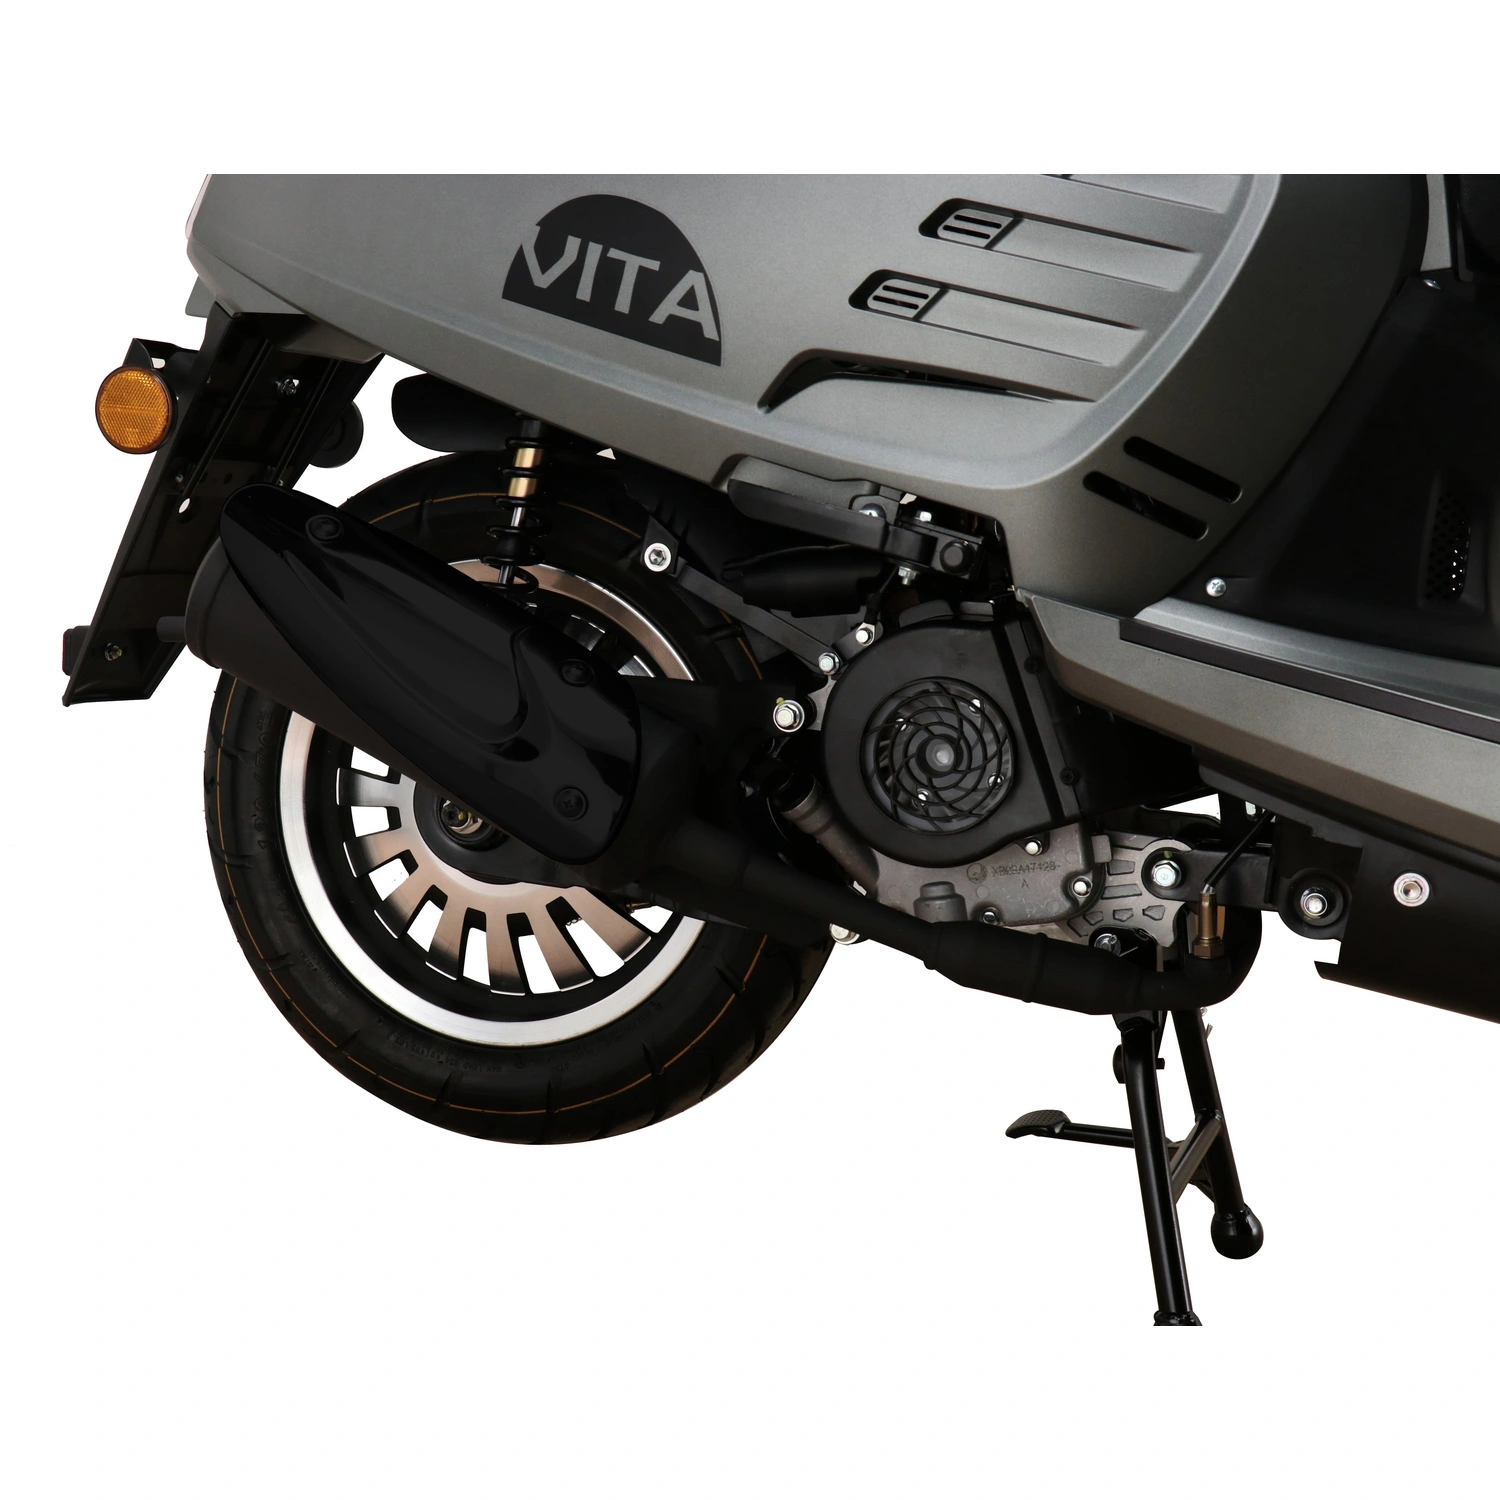 ALPHA MOTORS Motorroller »Vita«, 50 cm³, 45km/h, Euro 5